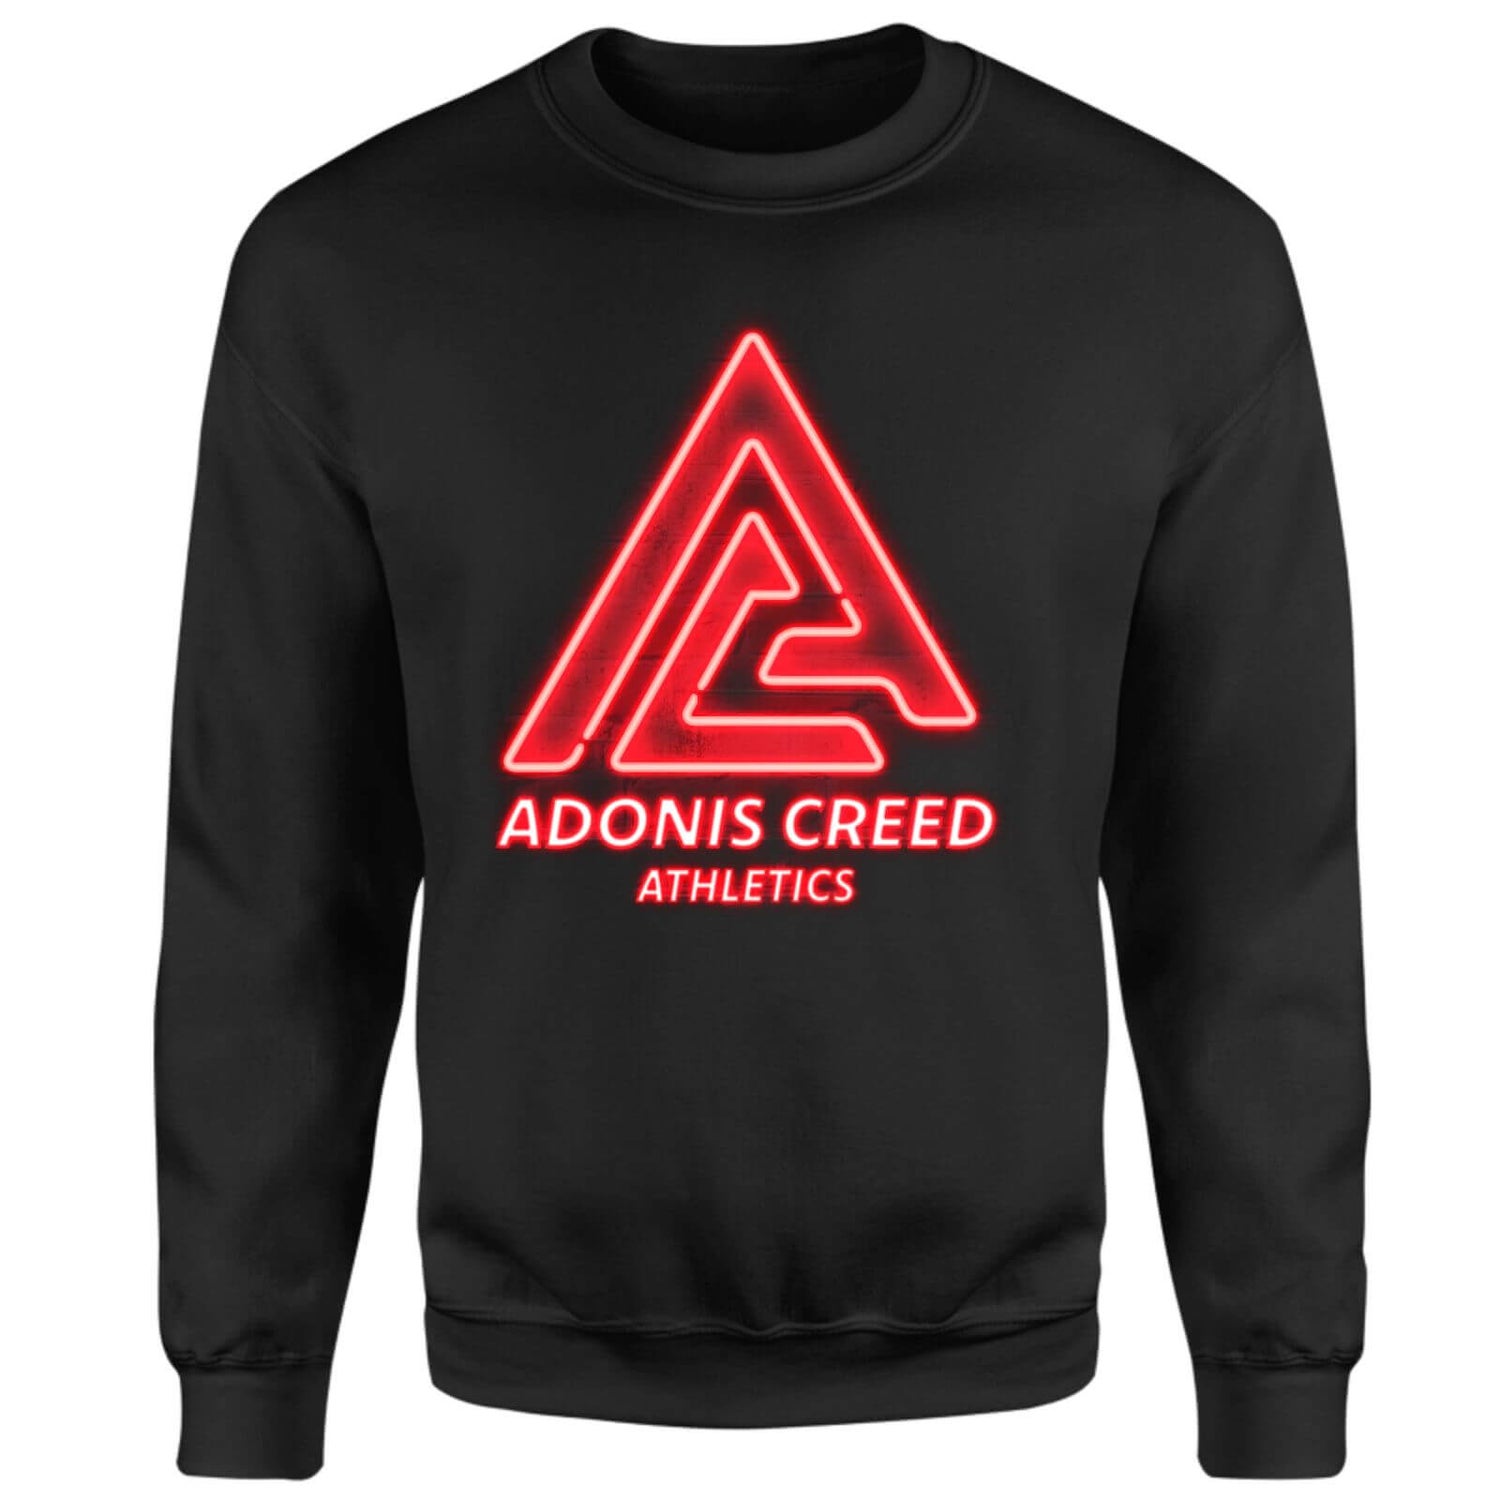 Creed Adonis Creed Athletics Neon Sign Sweatshirt - Black - XS